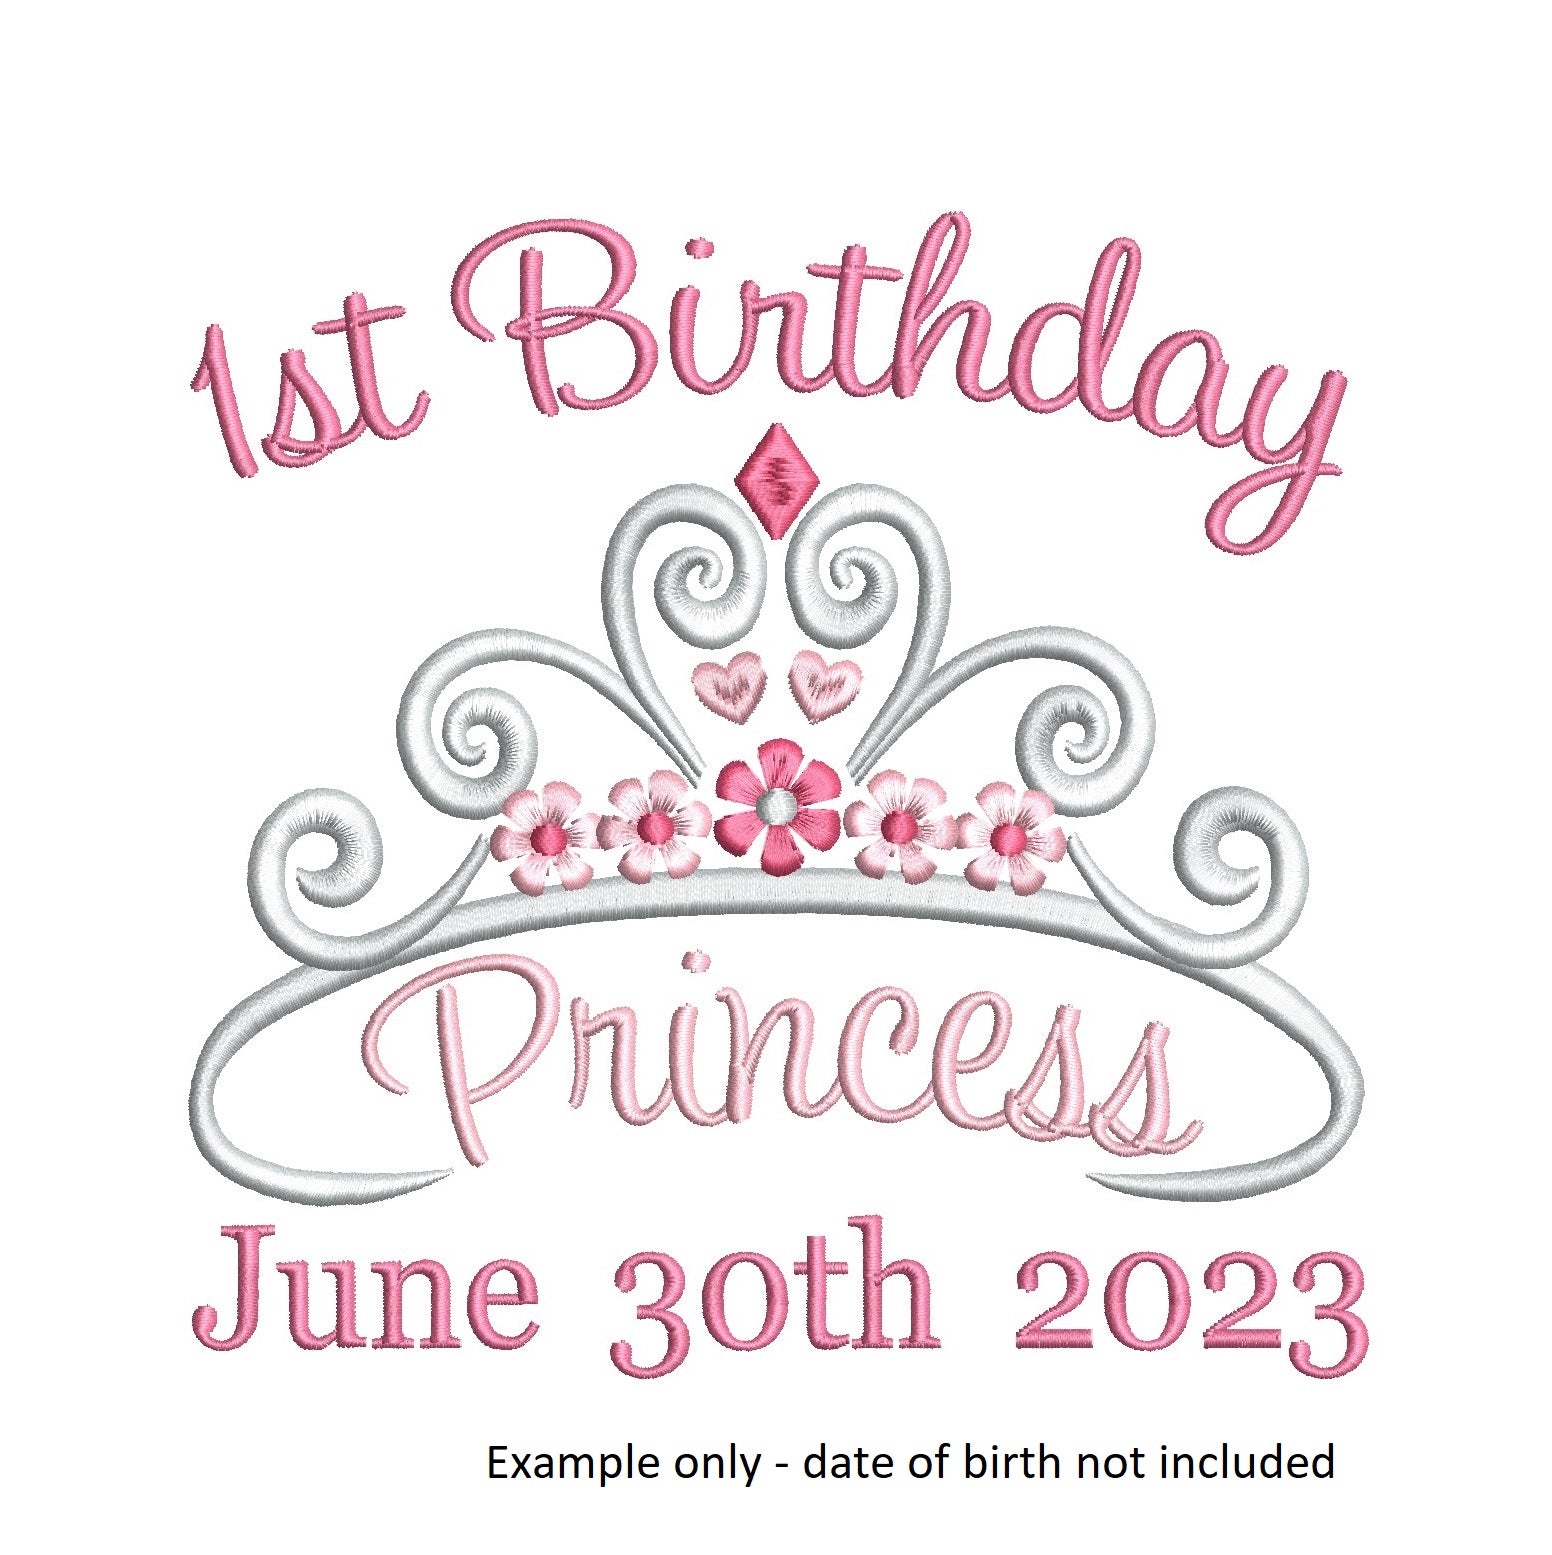 1st birthday princess crown machine embroidery design by rosiedayembroidery.com